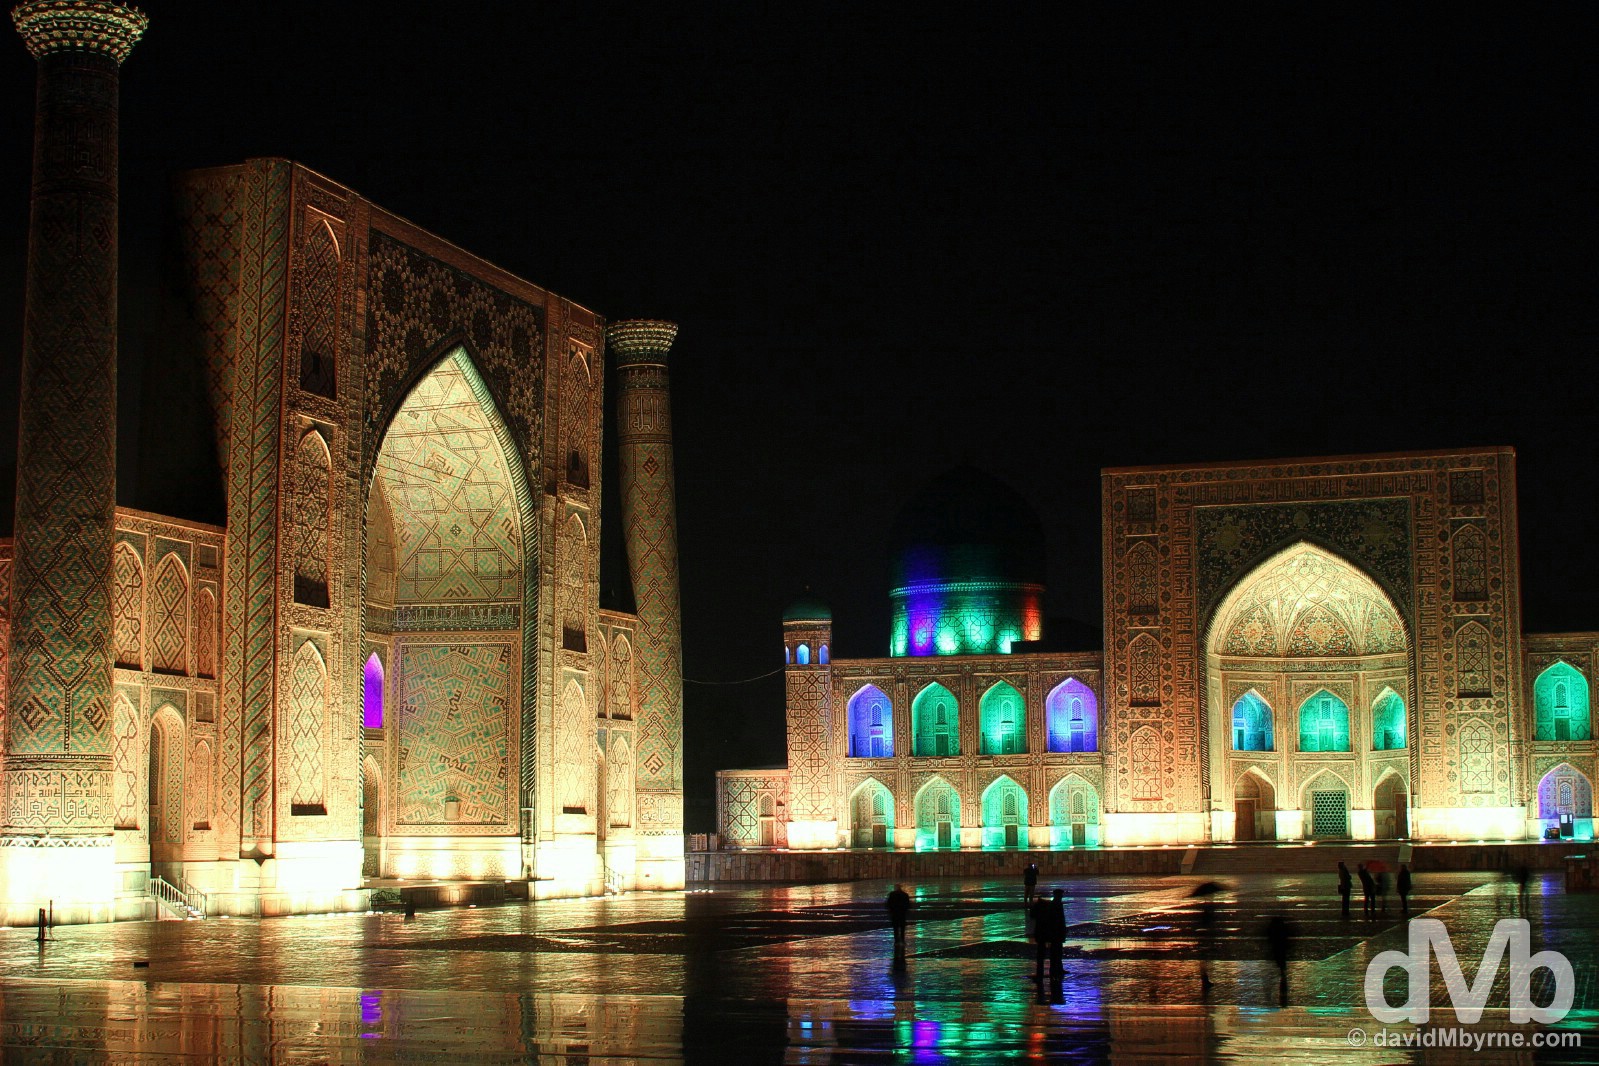 Sound & Light Show at the The Registan in Samarkand, Uzbekistan. March 7, 2015.